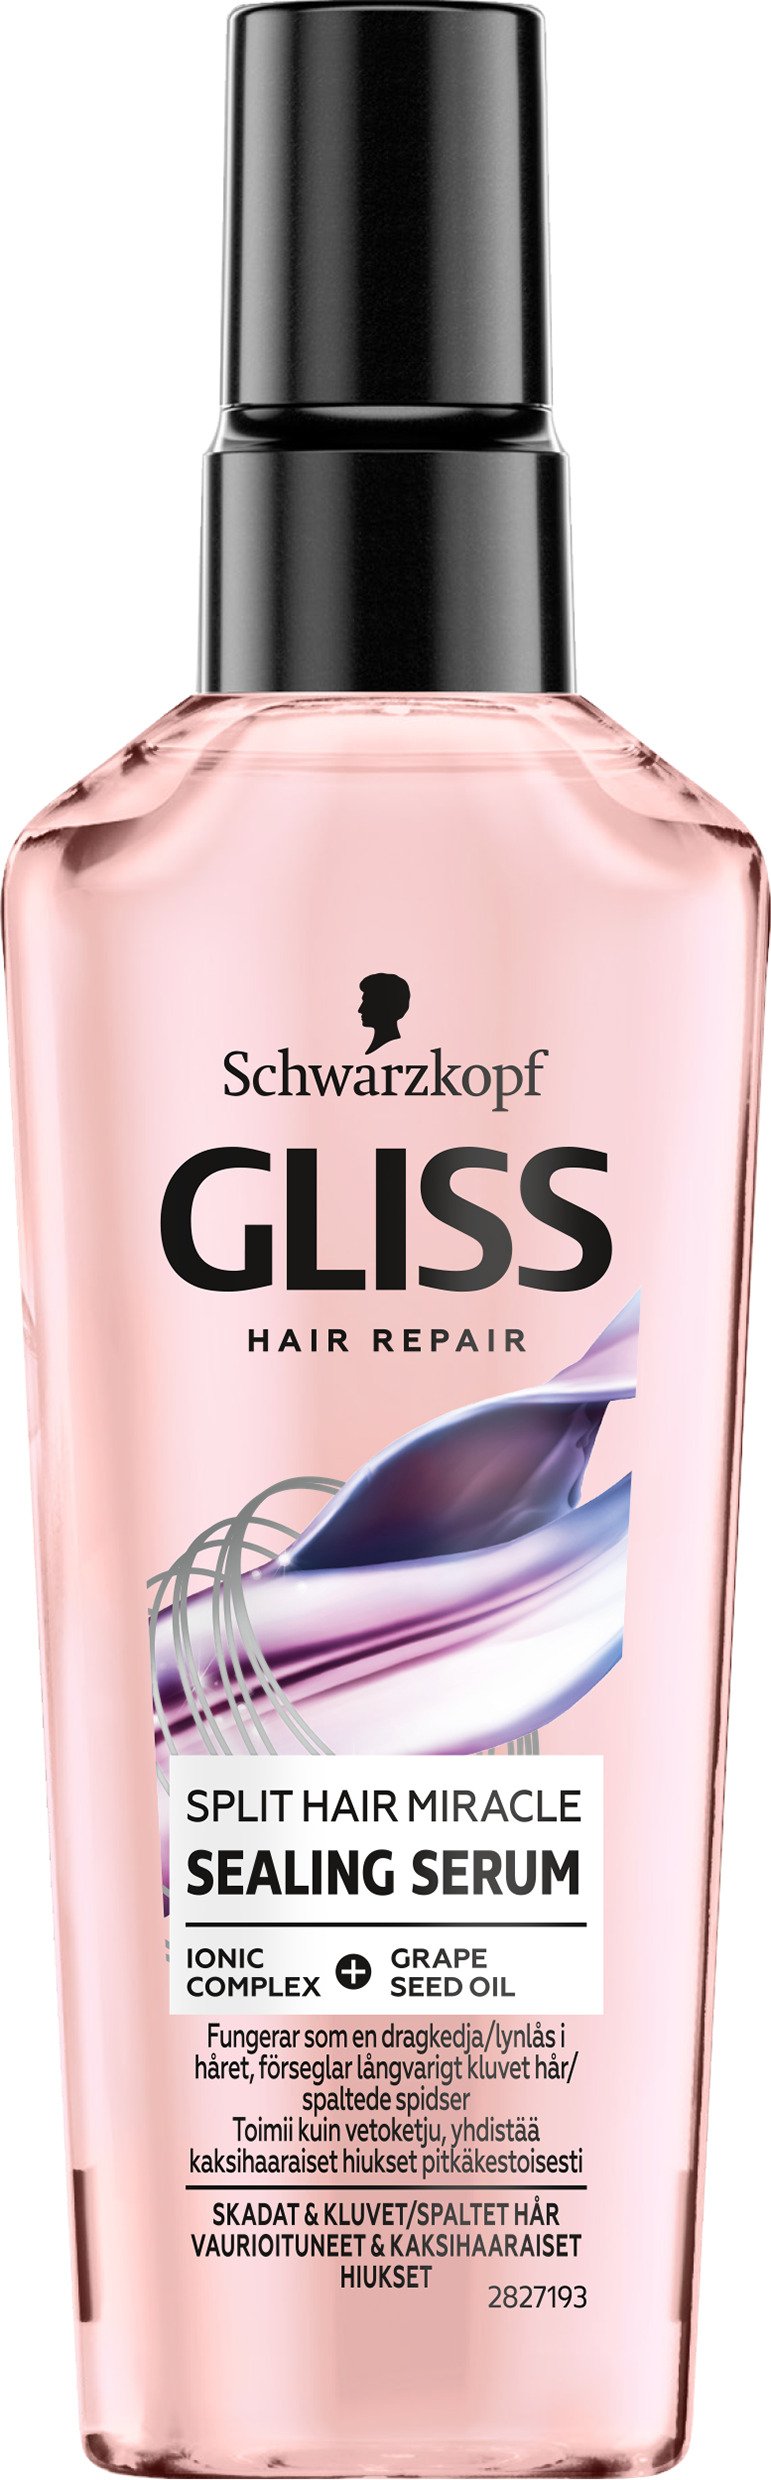 Schwarzkopf Gliss Split Hair Miracle Serum 75ml